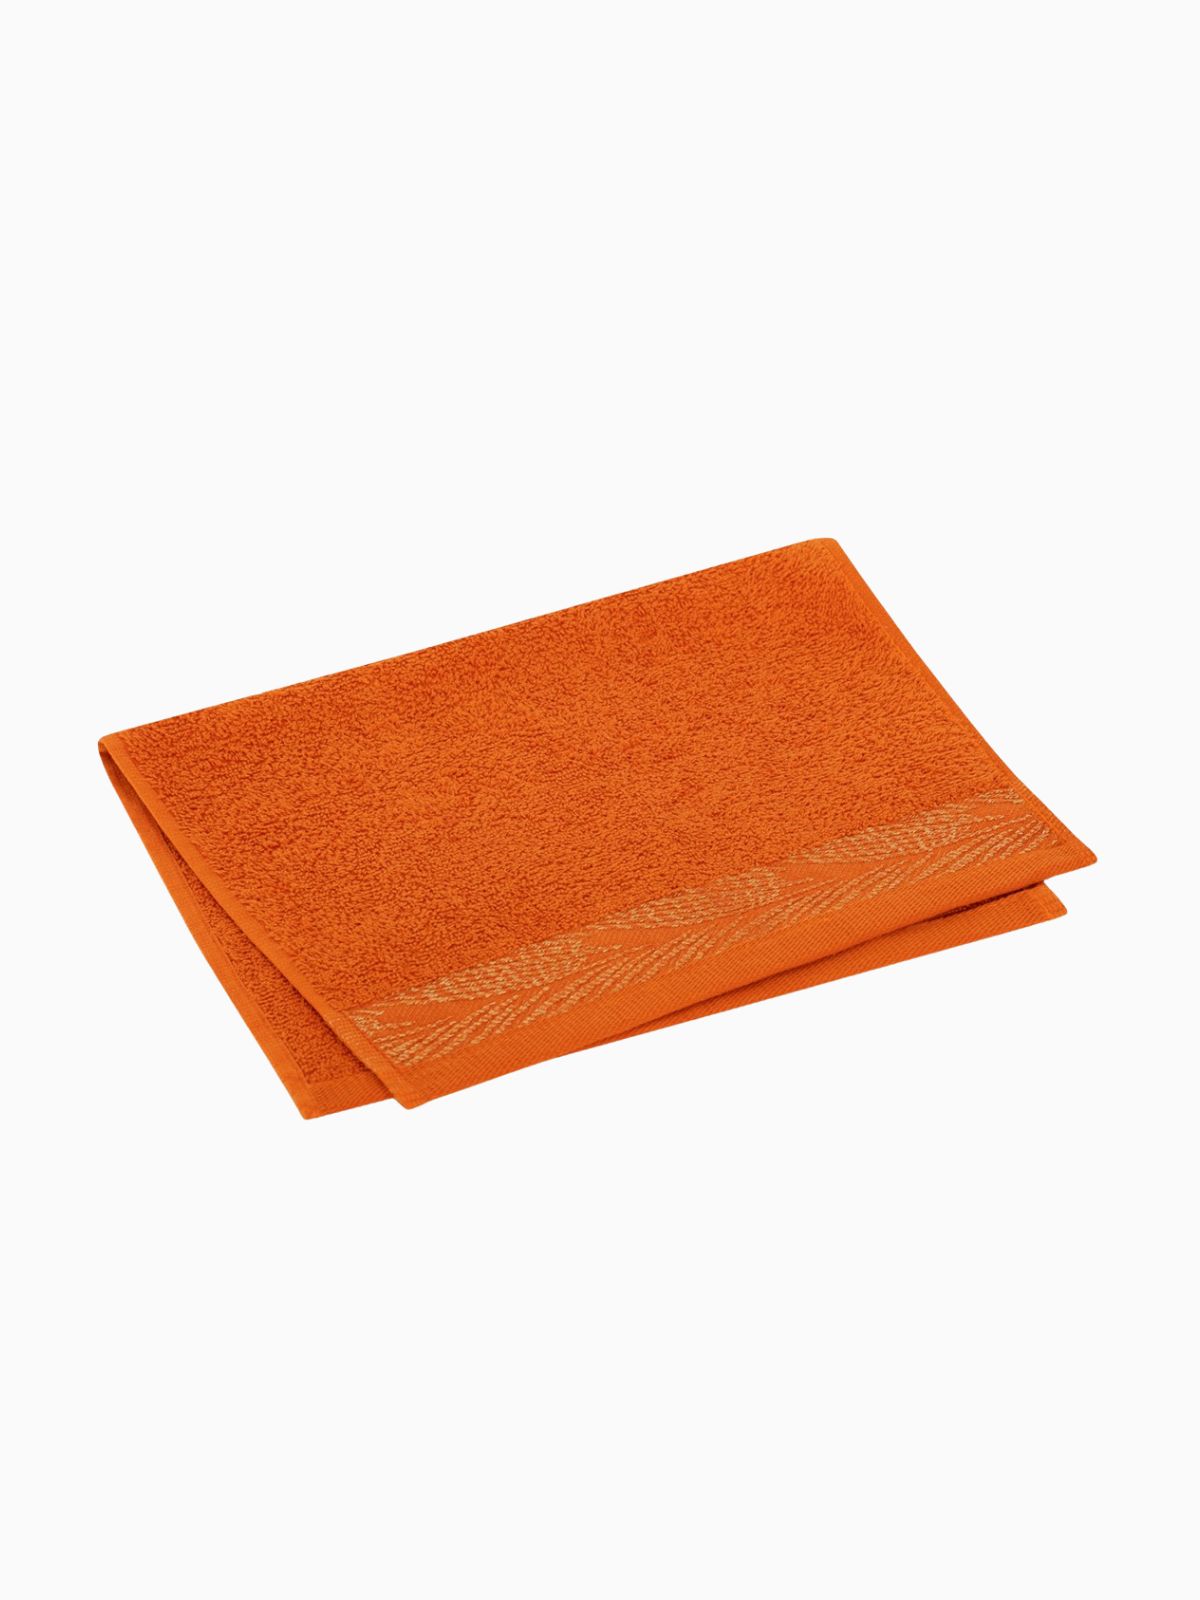 Asciugamano Allium in 100% cotone, colore arancione 30x50 cm.-1